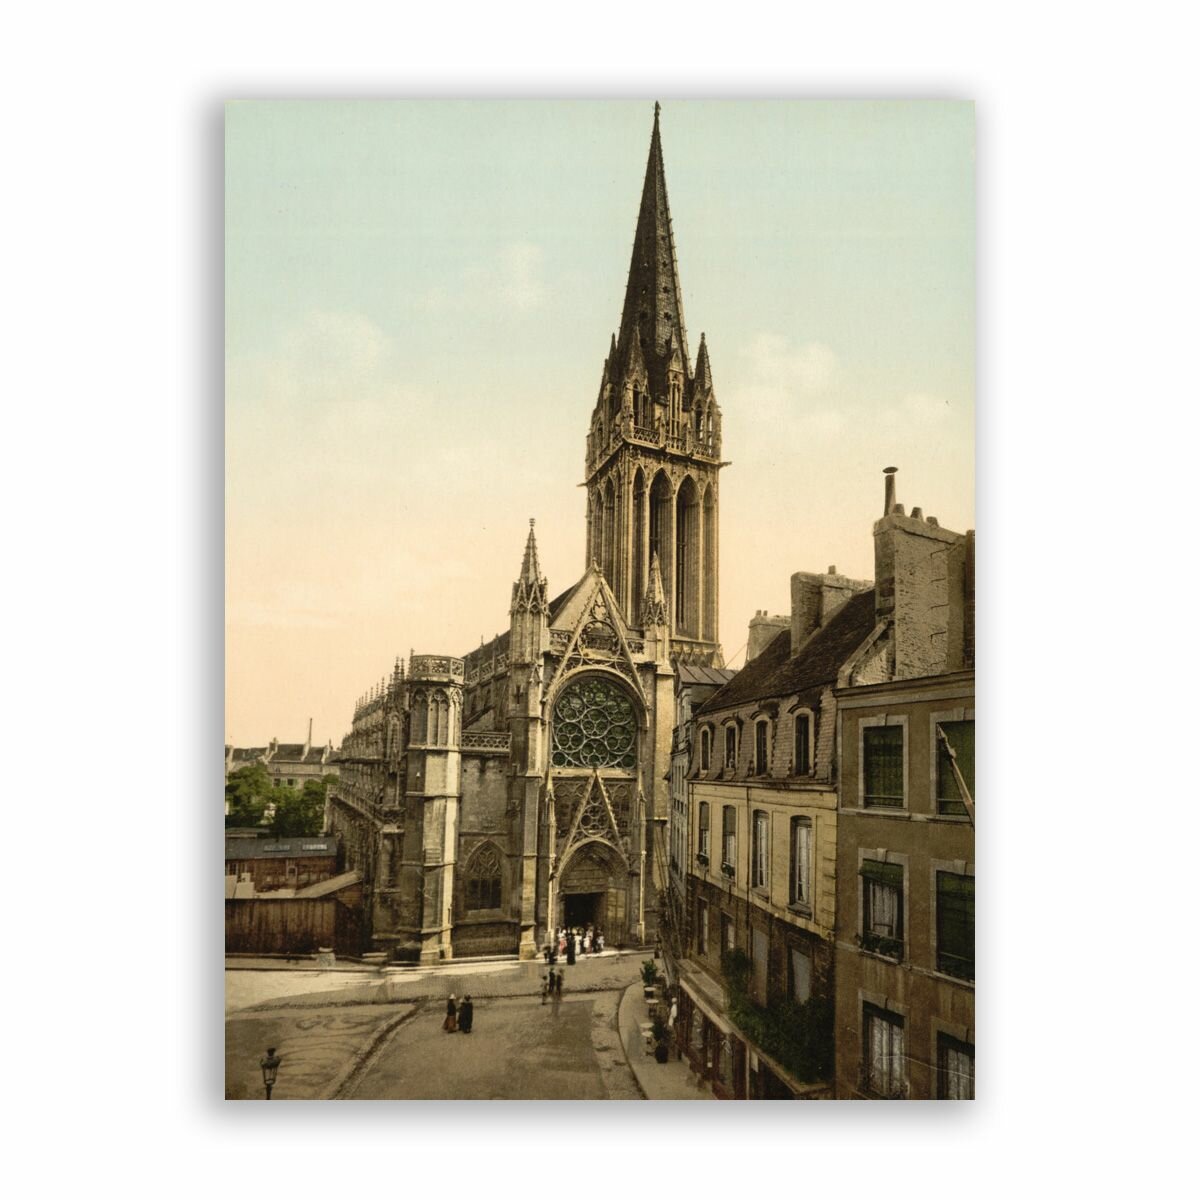 Постер, плакат на бумаге / St. Pierre church, Caen, France / Размер 30 x 40 см